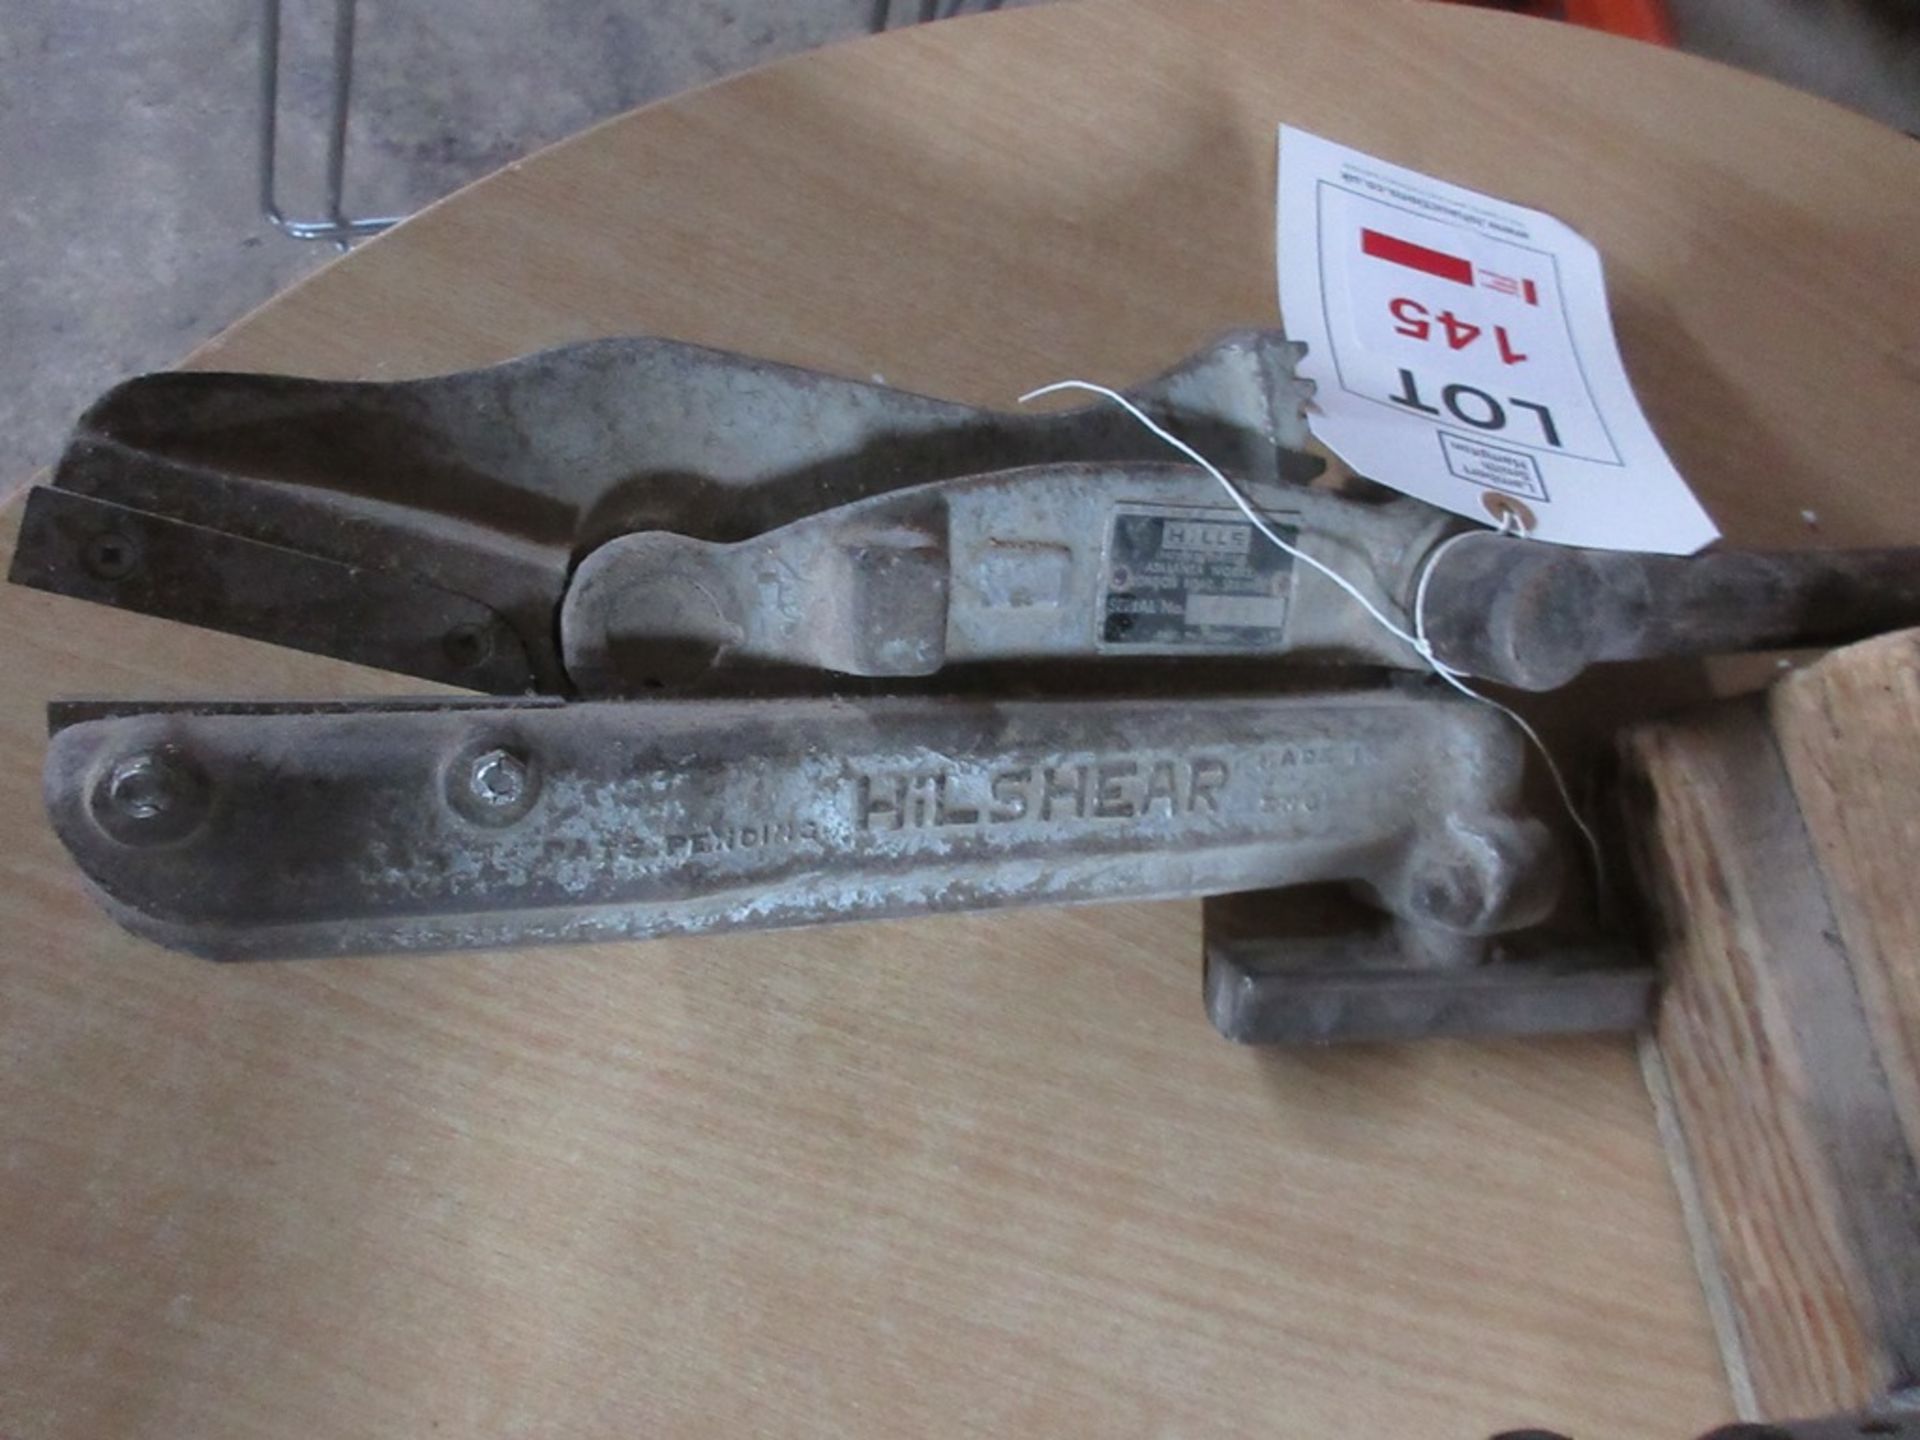 Hills Hand operated shears, 1 x Felco cropper